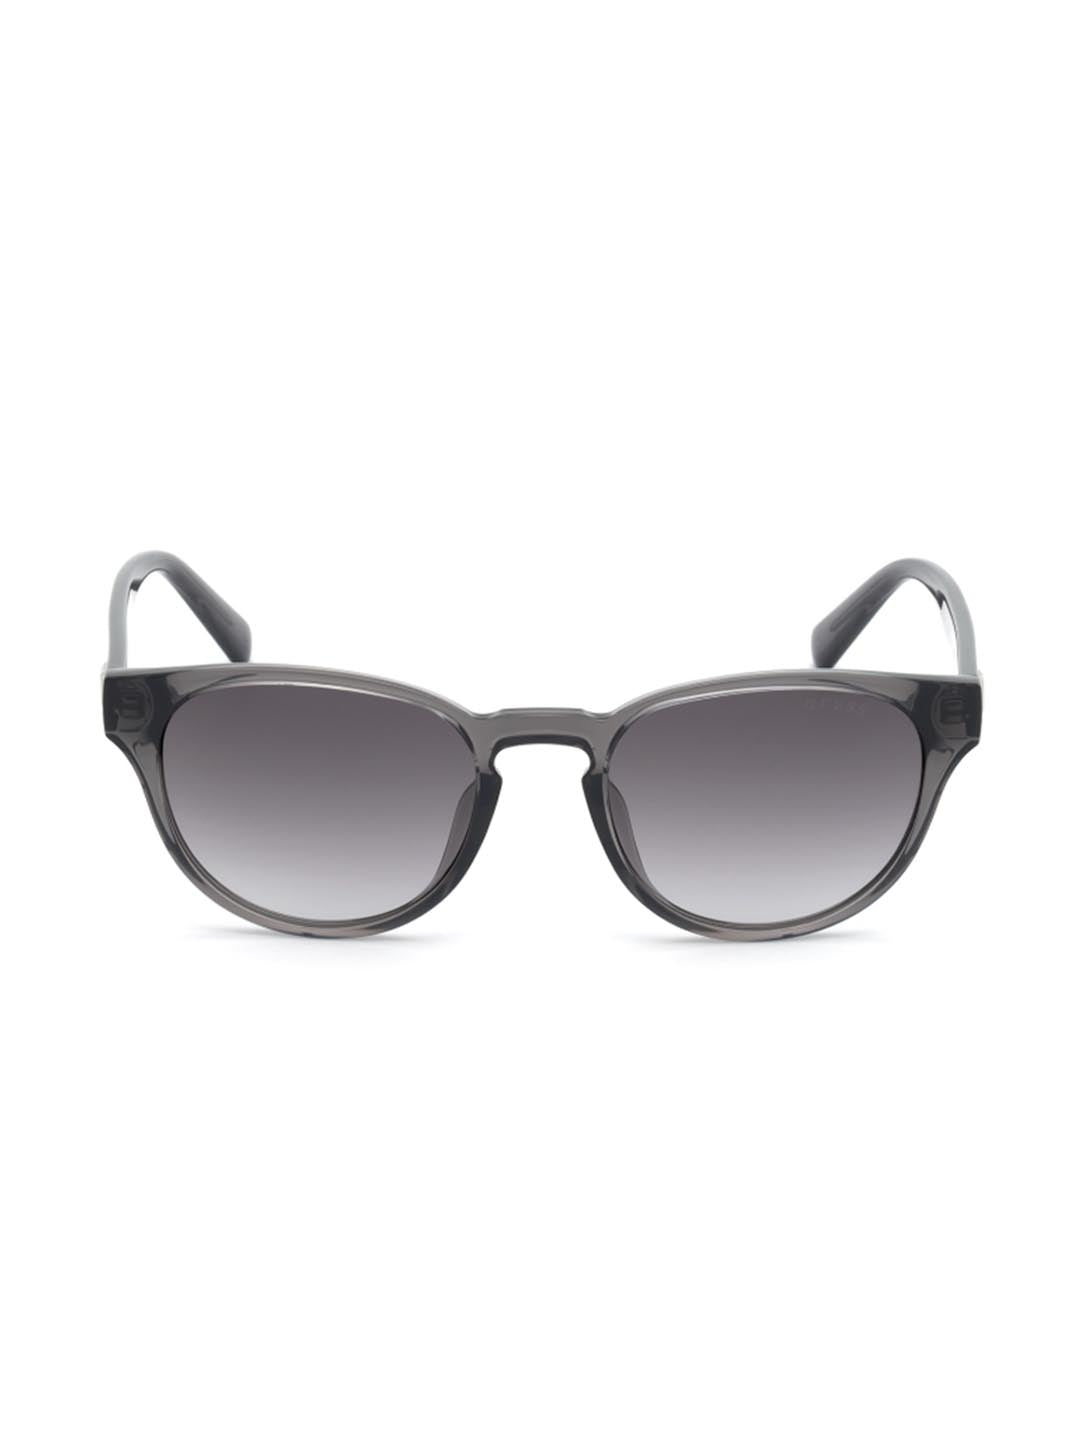 Guess GU6970 51 20B Grey Oval Sunglasses